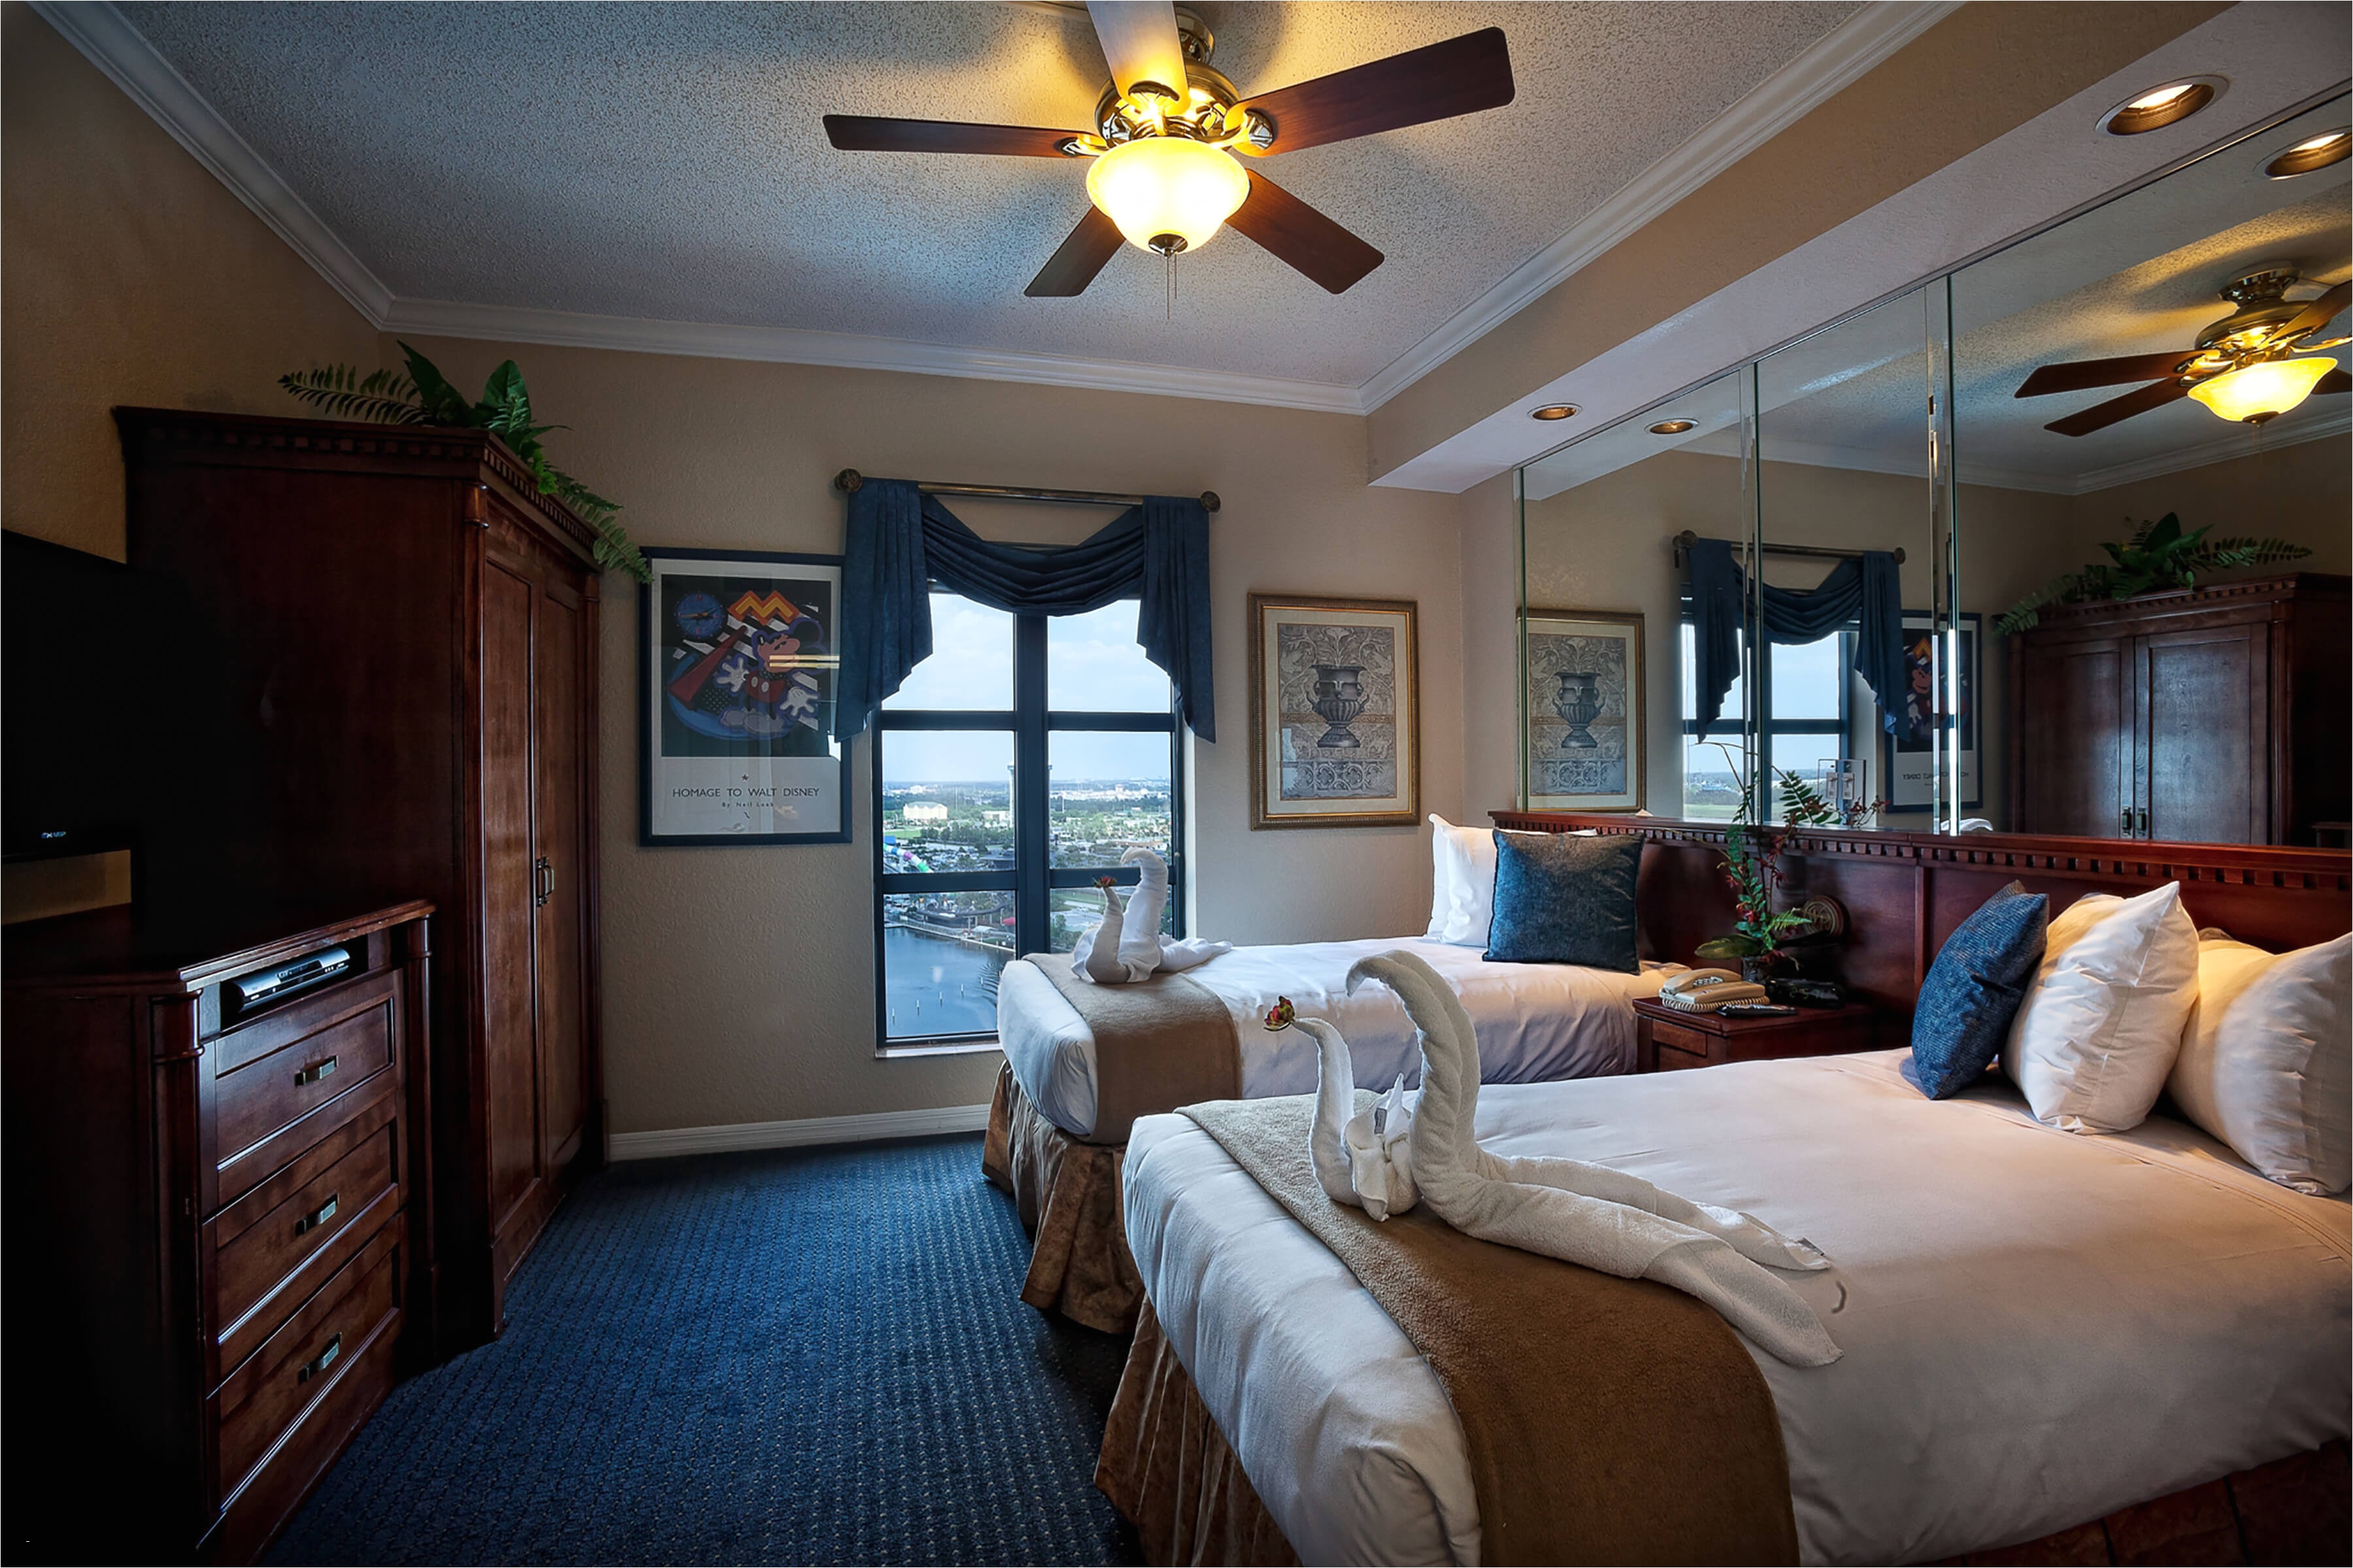 2 bedroom suites in orlando fl lovely westgate palace resort s of hotels in orlando florida